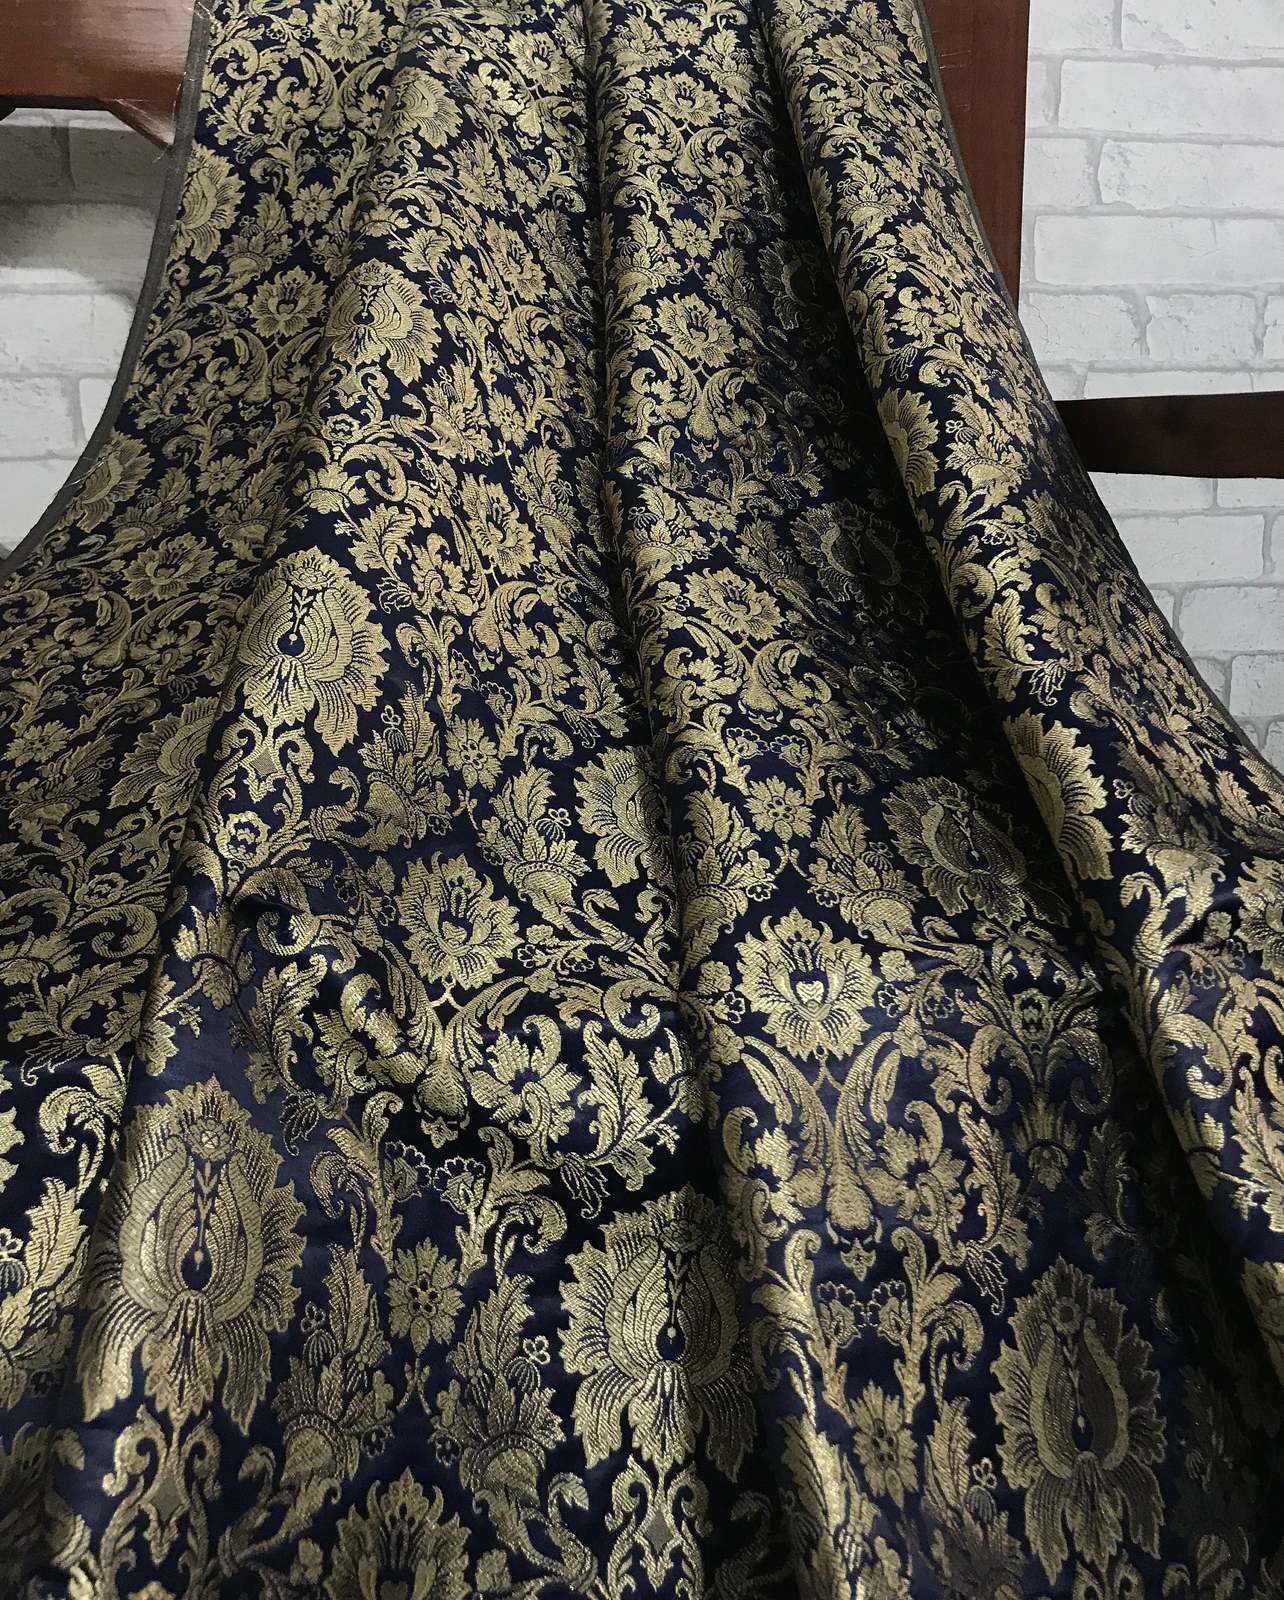 indian brocade fabric